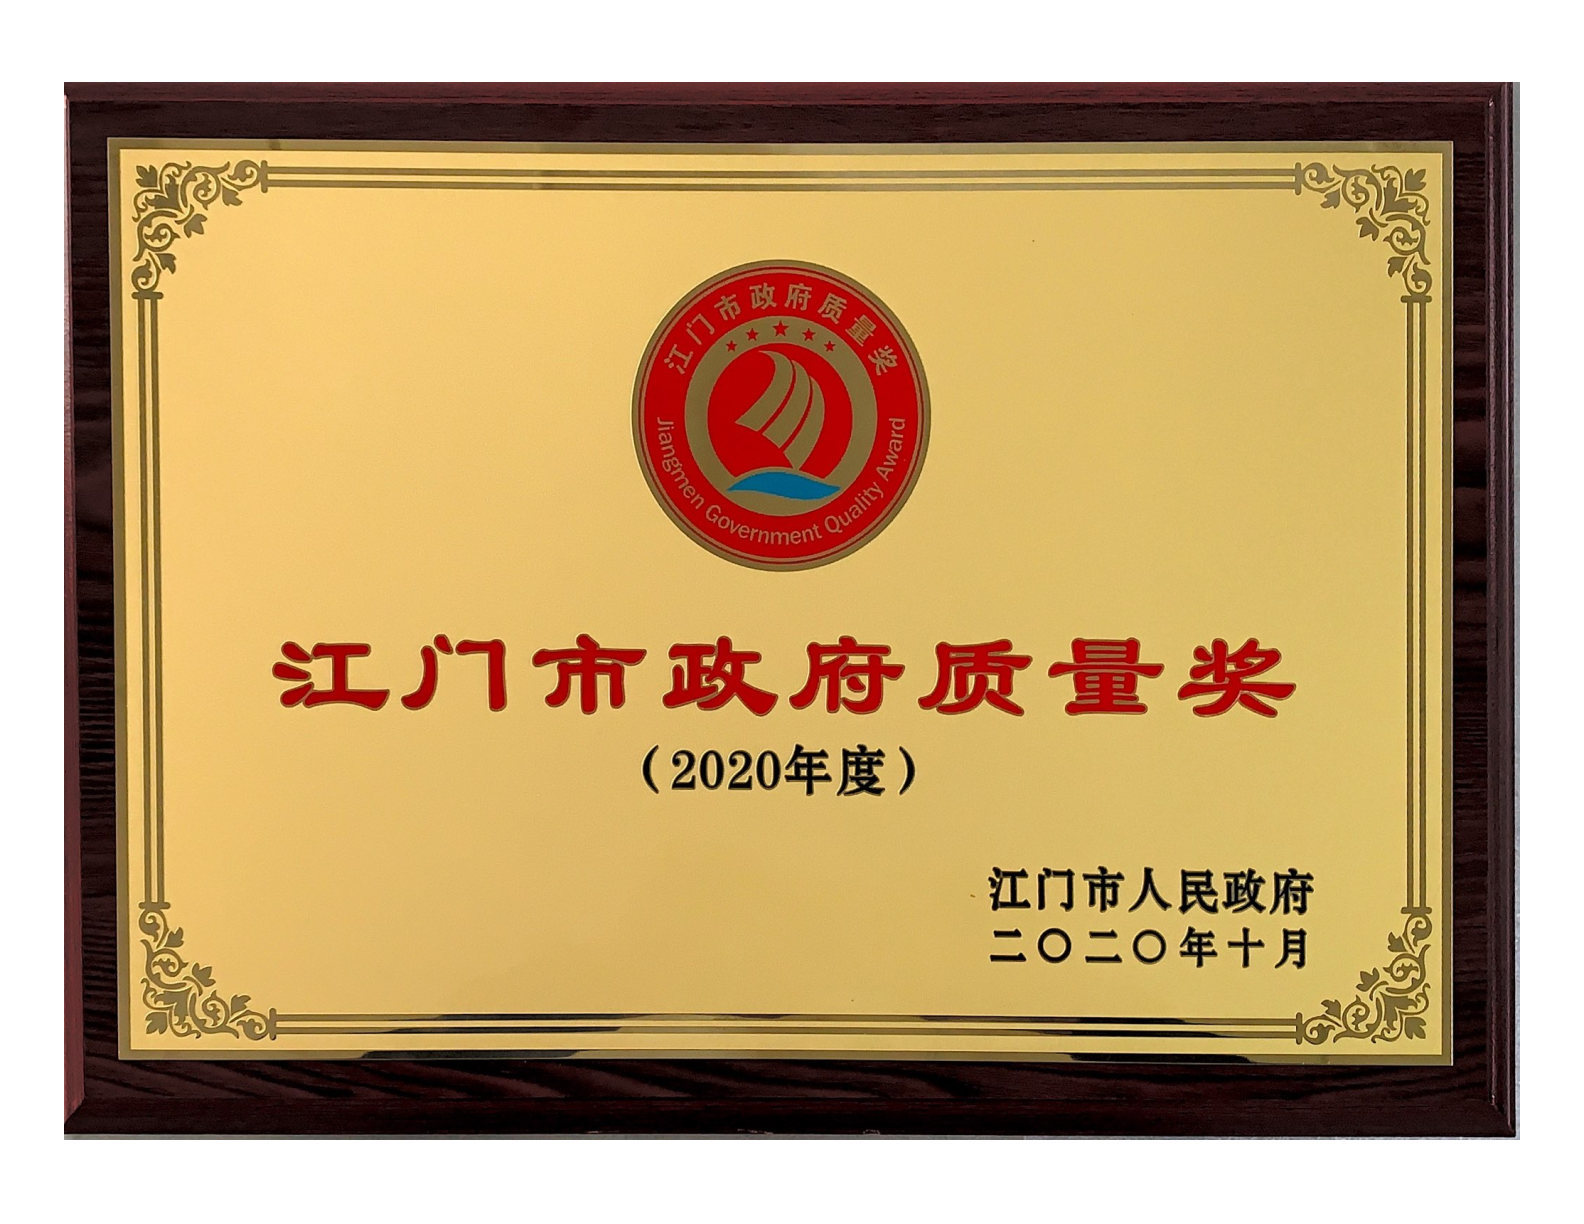 Quality awards by Jiangmen Municipal Government